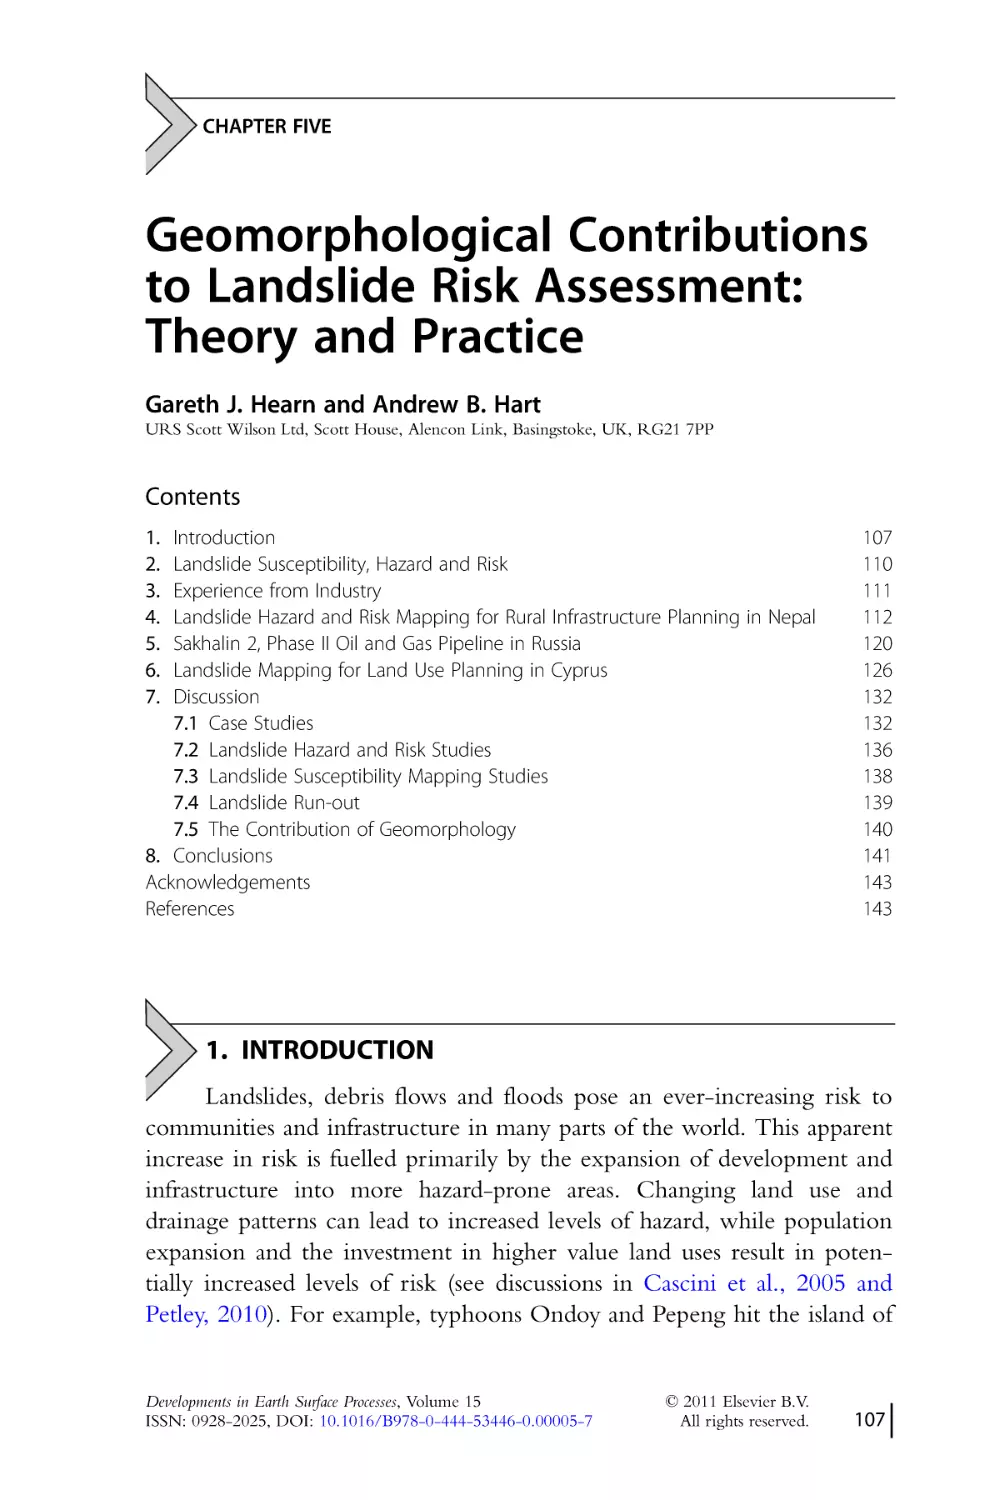 CHAPTER FIVE.
Geomorphological Contributions
to Landslide Risk Assessment
1. Introduction